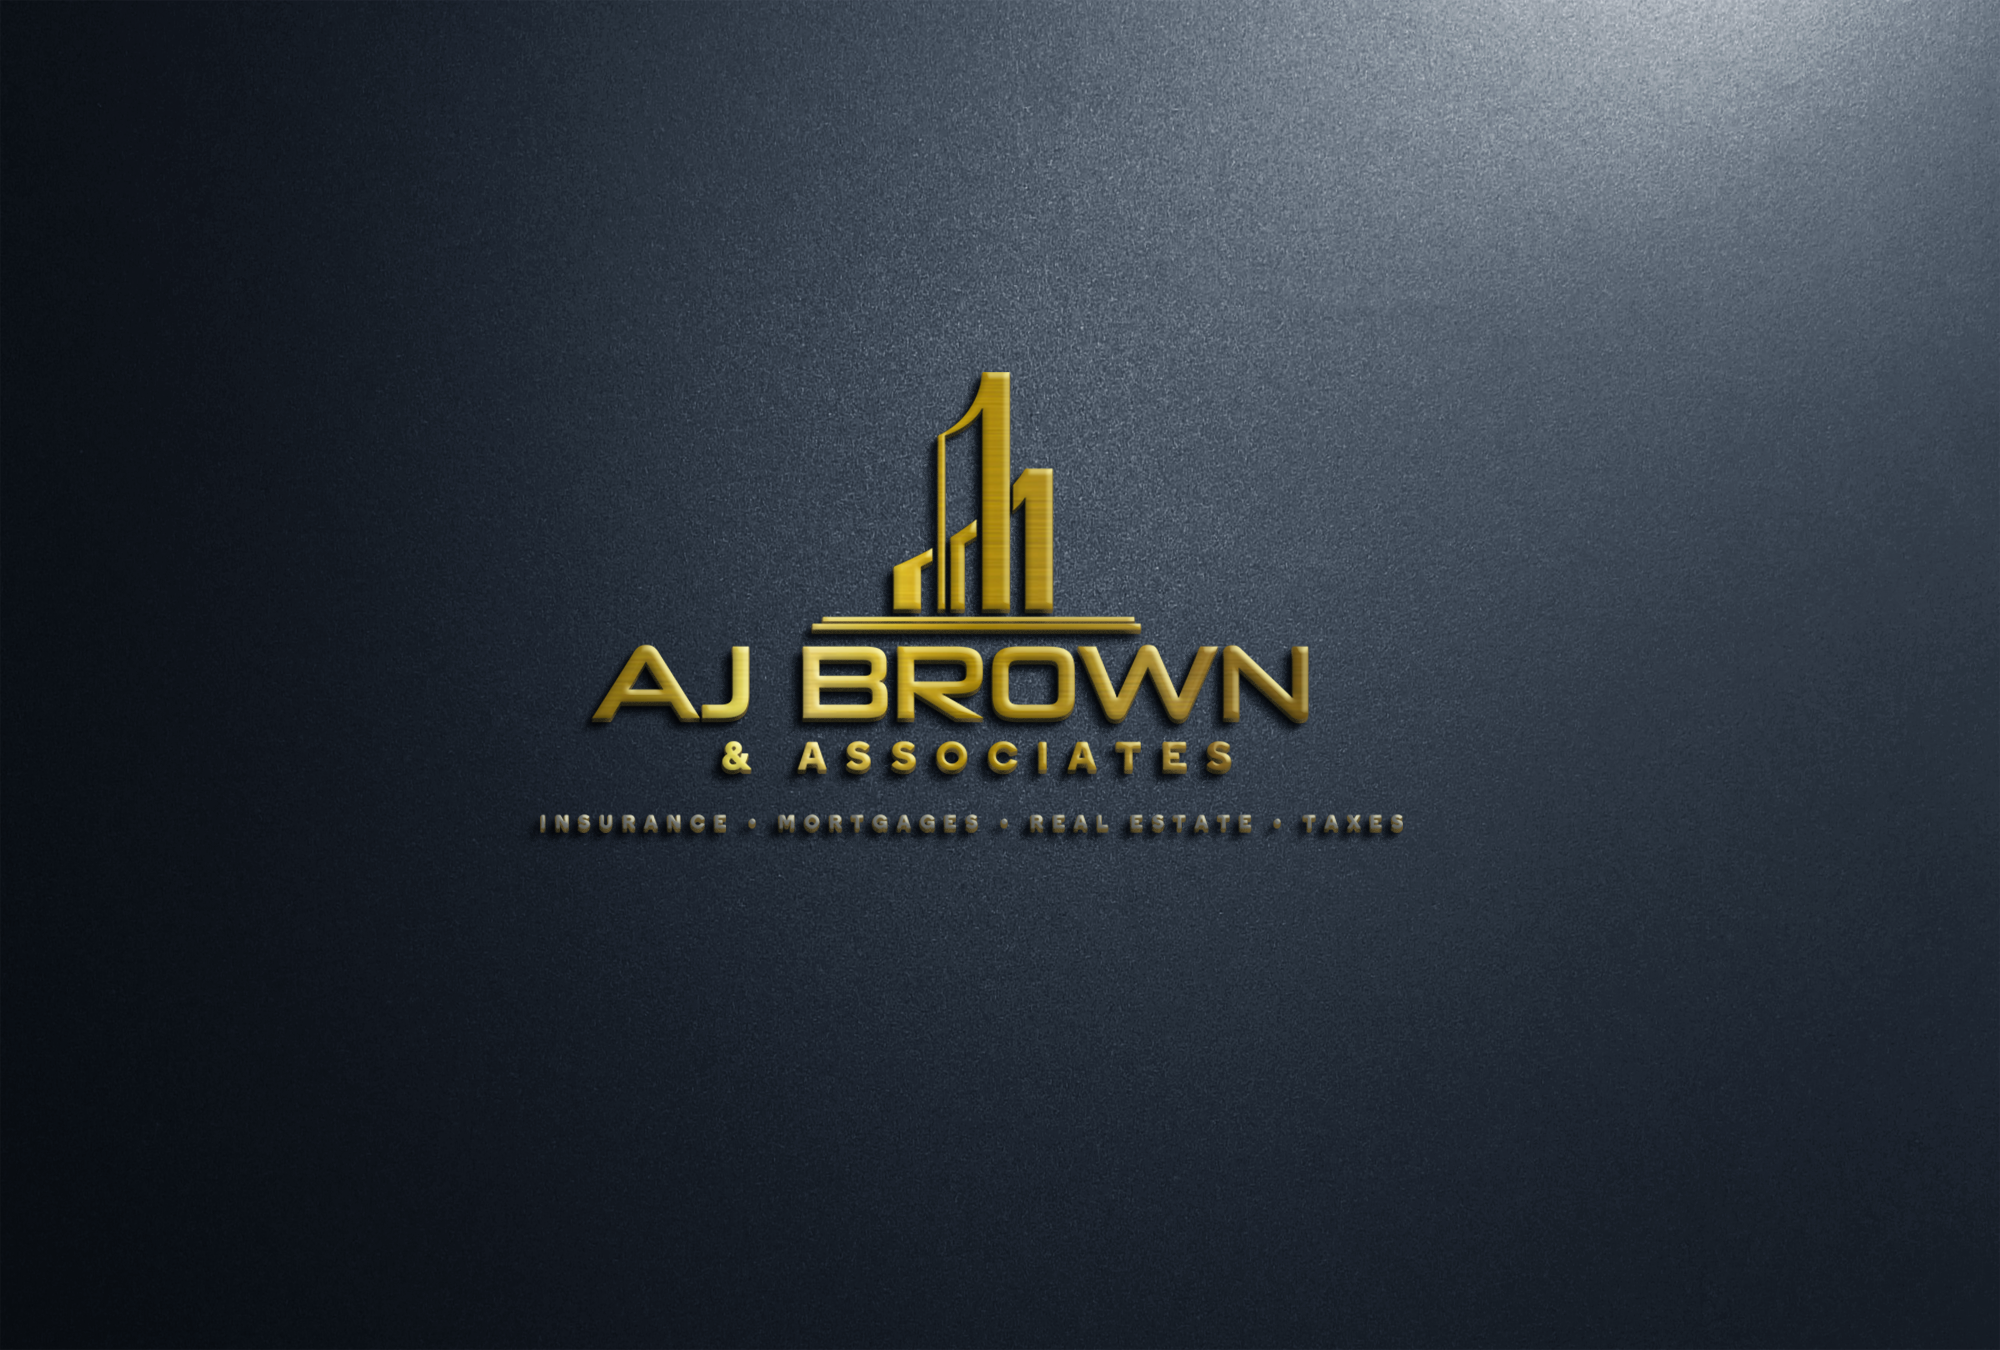 AJ Brown and Associates